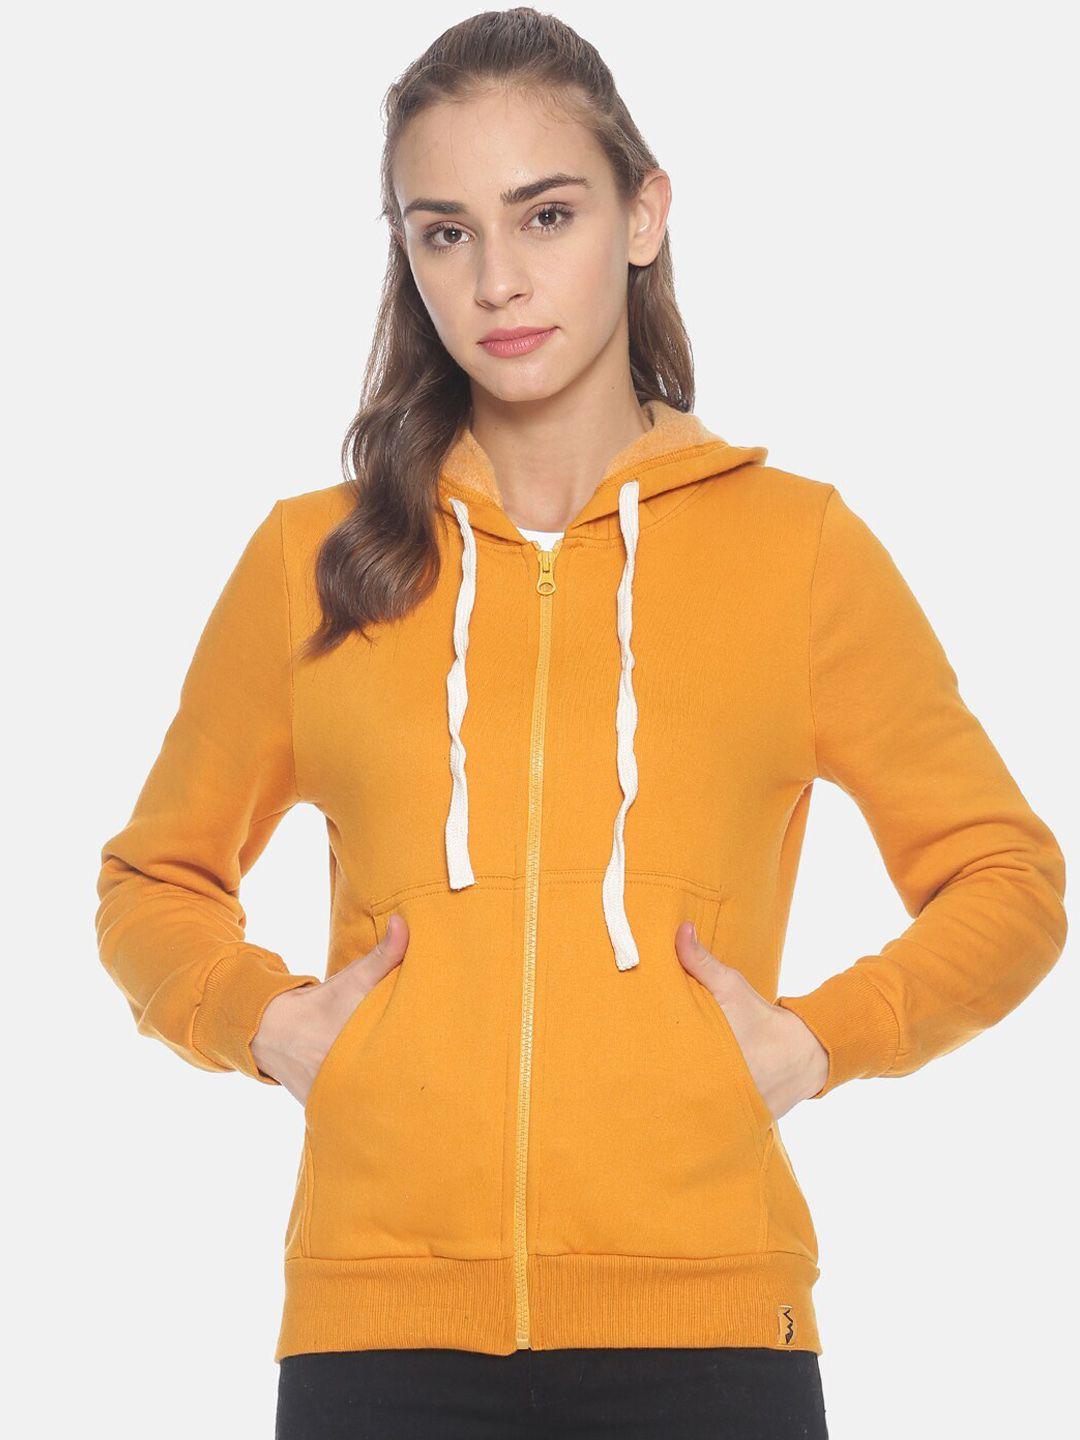 campus sutra women mustard yellow solid hooded sweatshirt